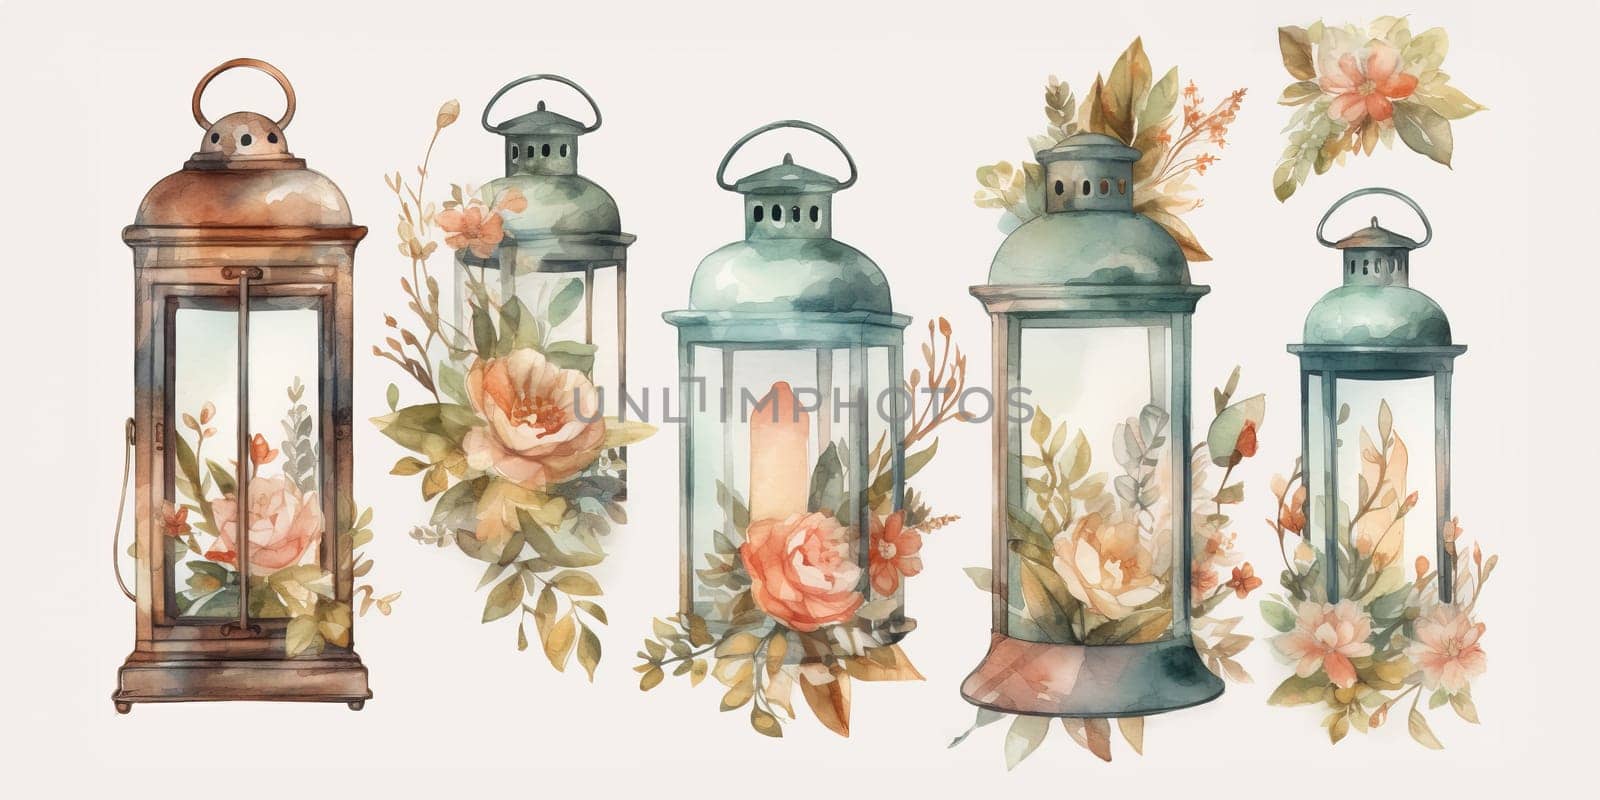 Watercolor Illustration Of Vintage Lanterns With Flowers Inside by GekaSkr